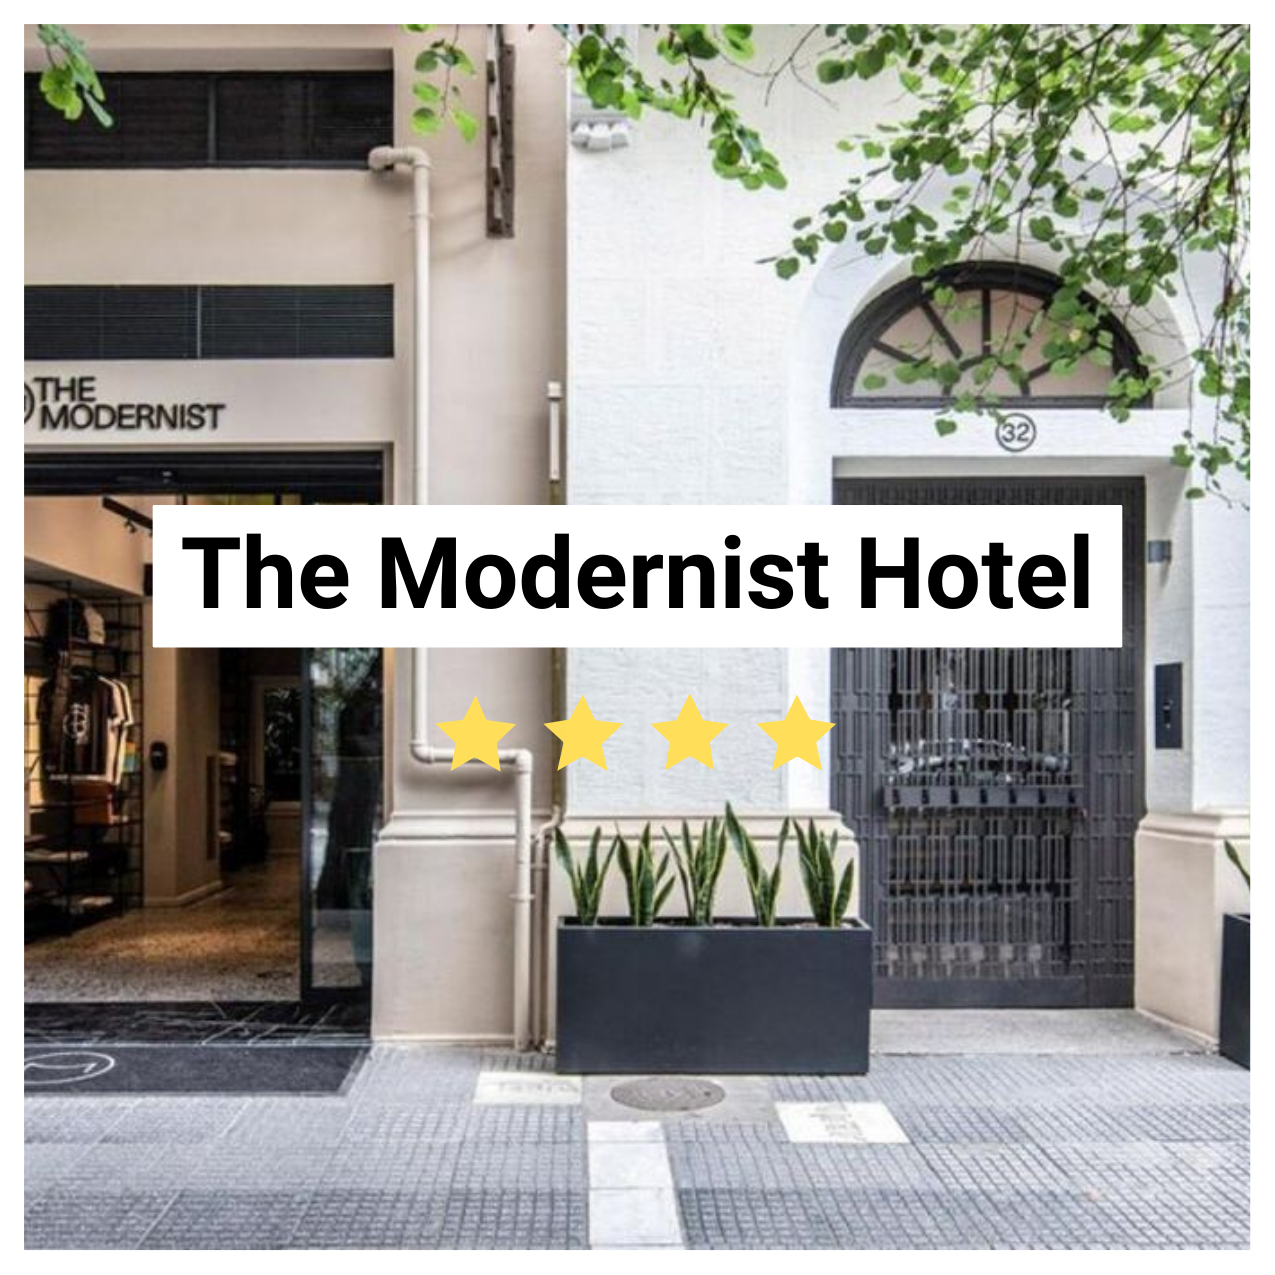 The Modernist Hotel Image. 